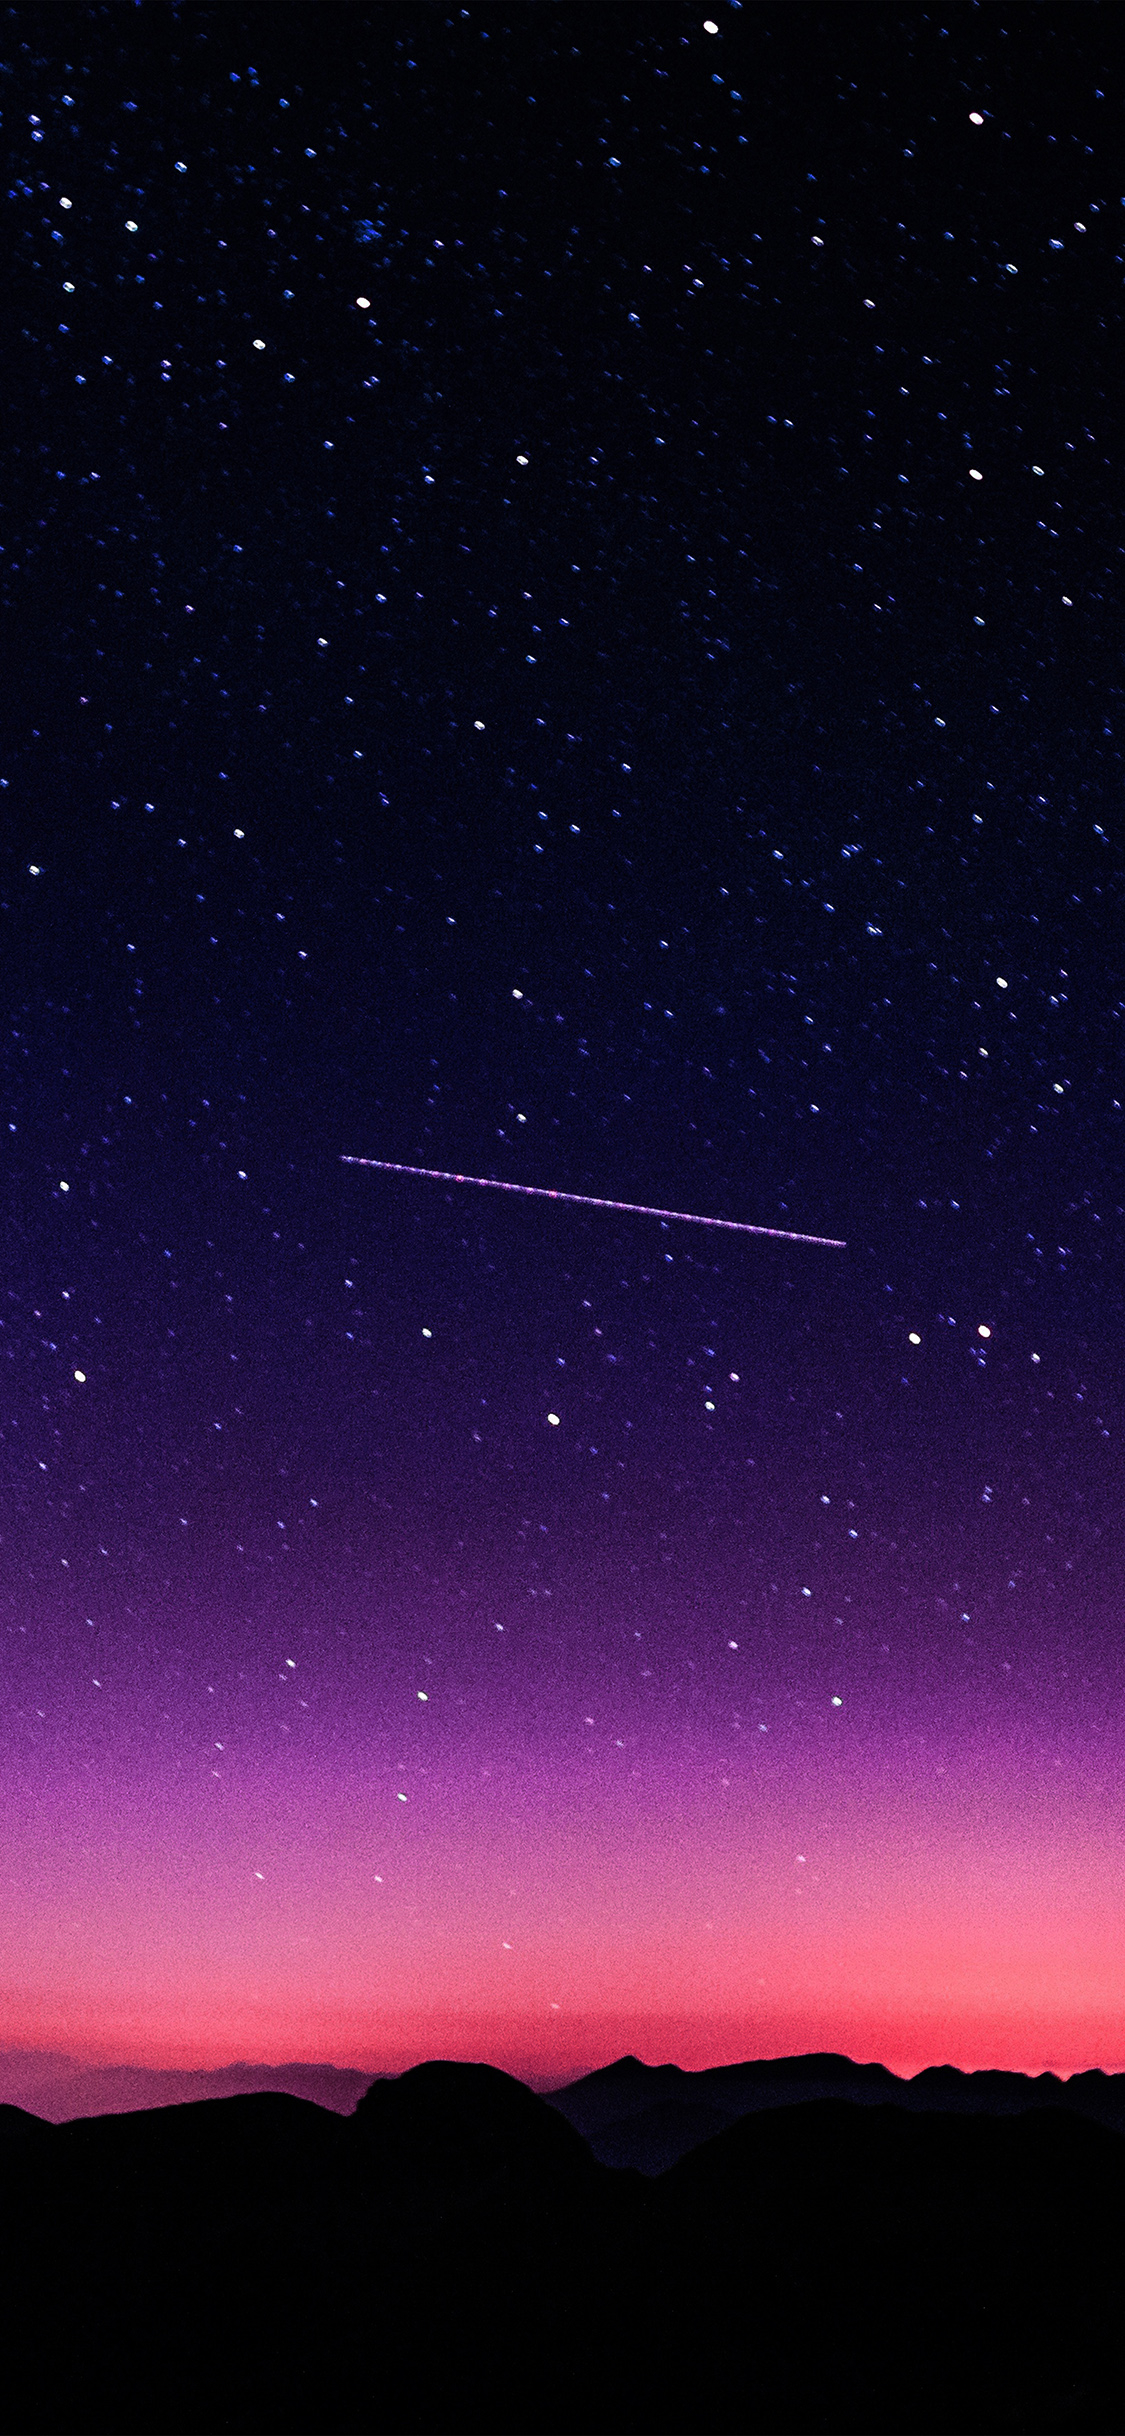 1125x2436 | iPhone11 wallpaper | ne64-star-galaxynight-sky-mountain-purple-pink-nature-space